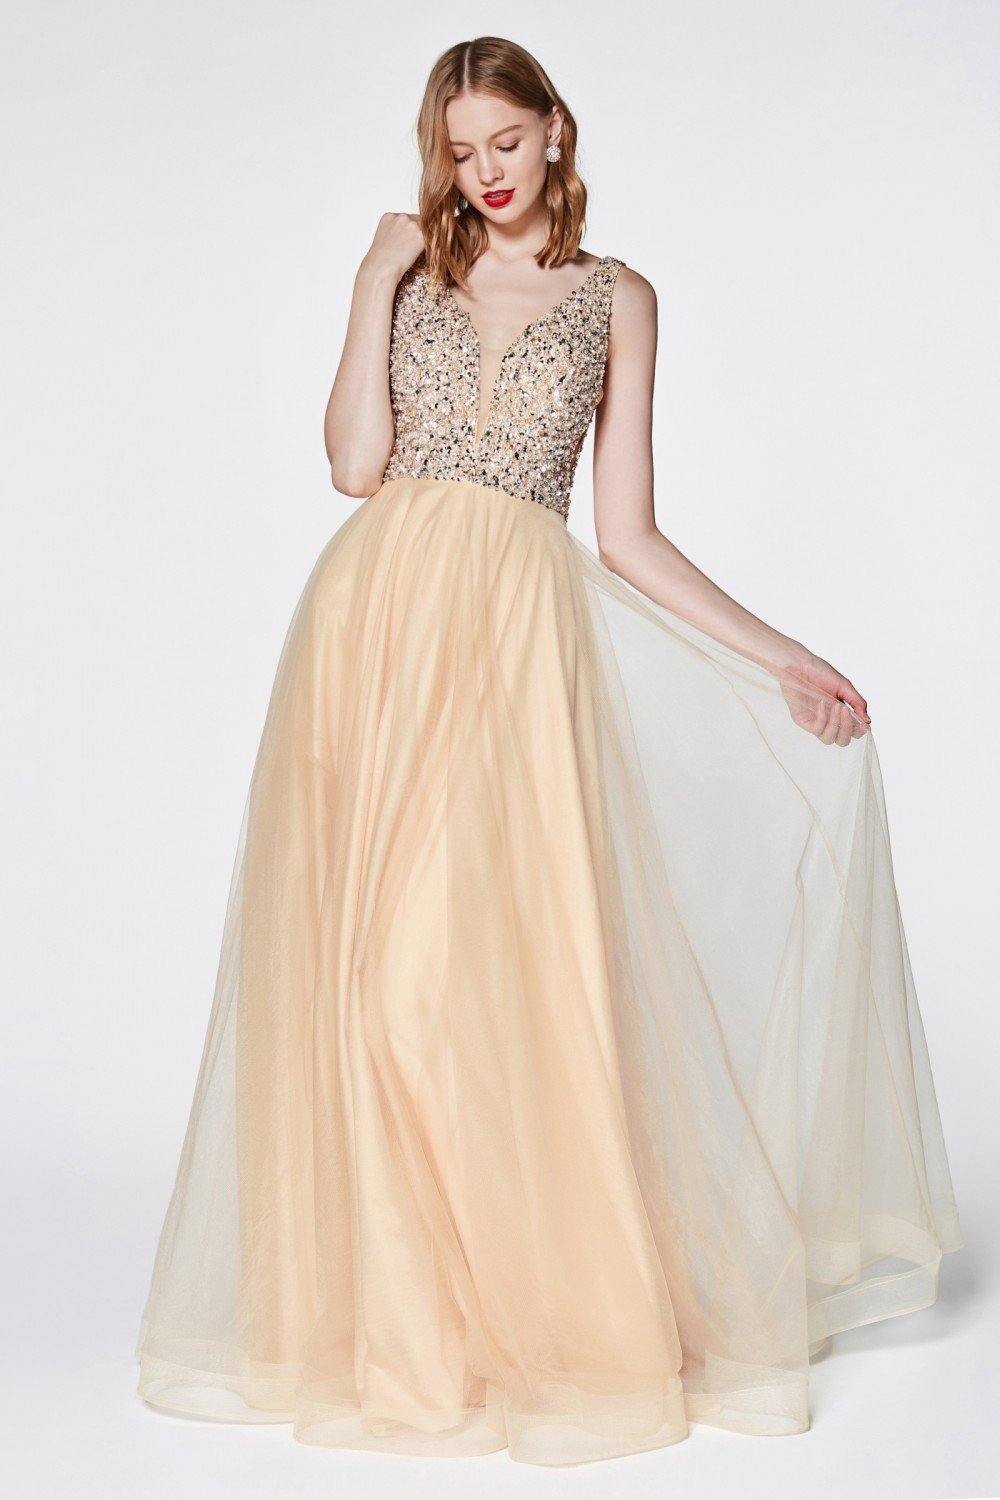 Sleeveless Long Gown Evening Dress Formal - The Dress Outlet Cinderella Divine